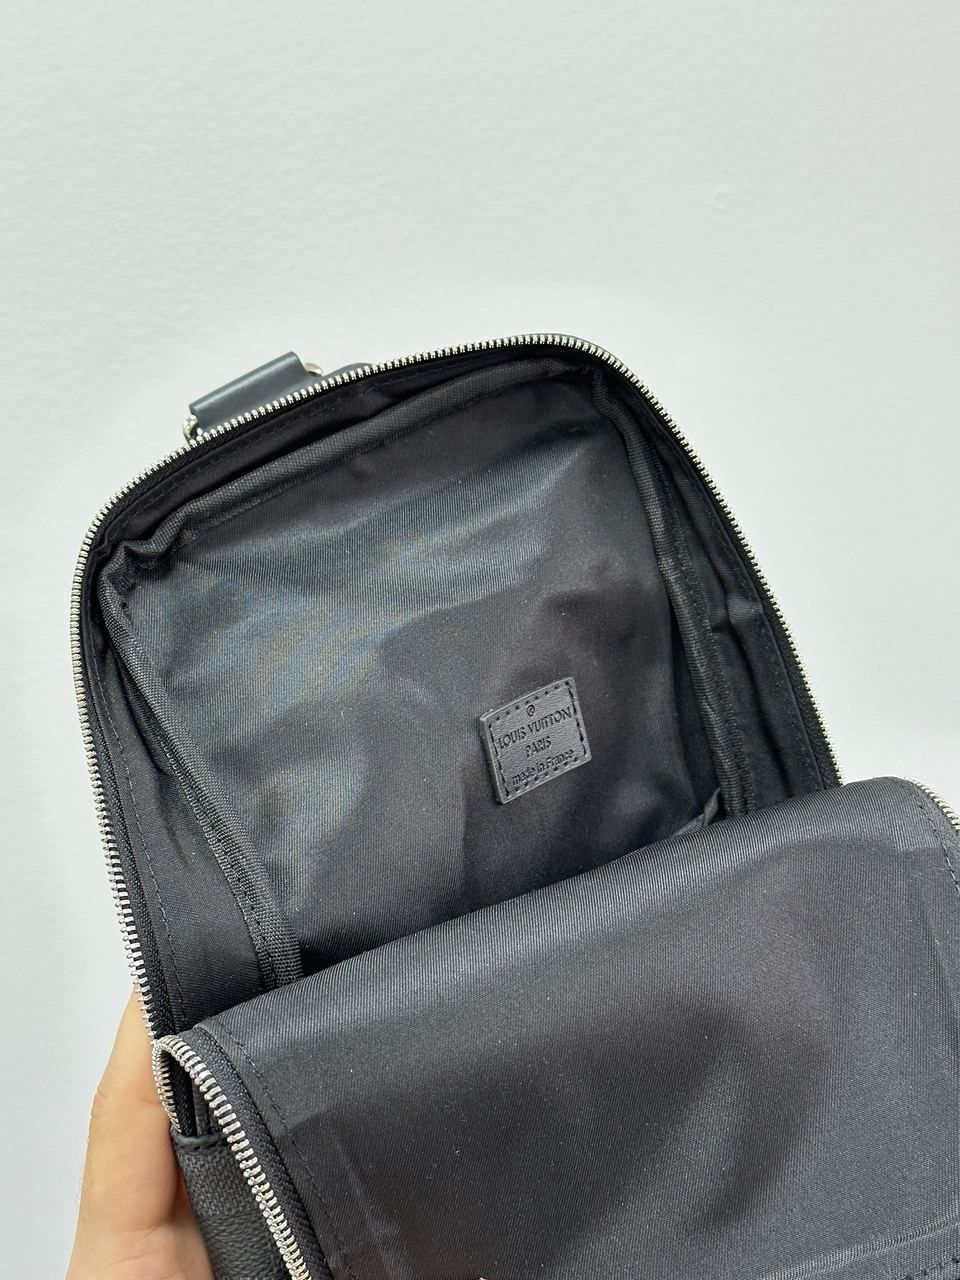 Мужская сумка Louis Vuitton через плечо мессенджер чоловіча кросс-боди